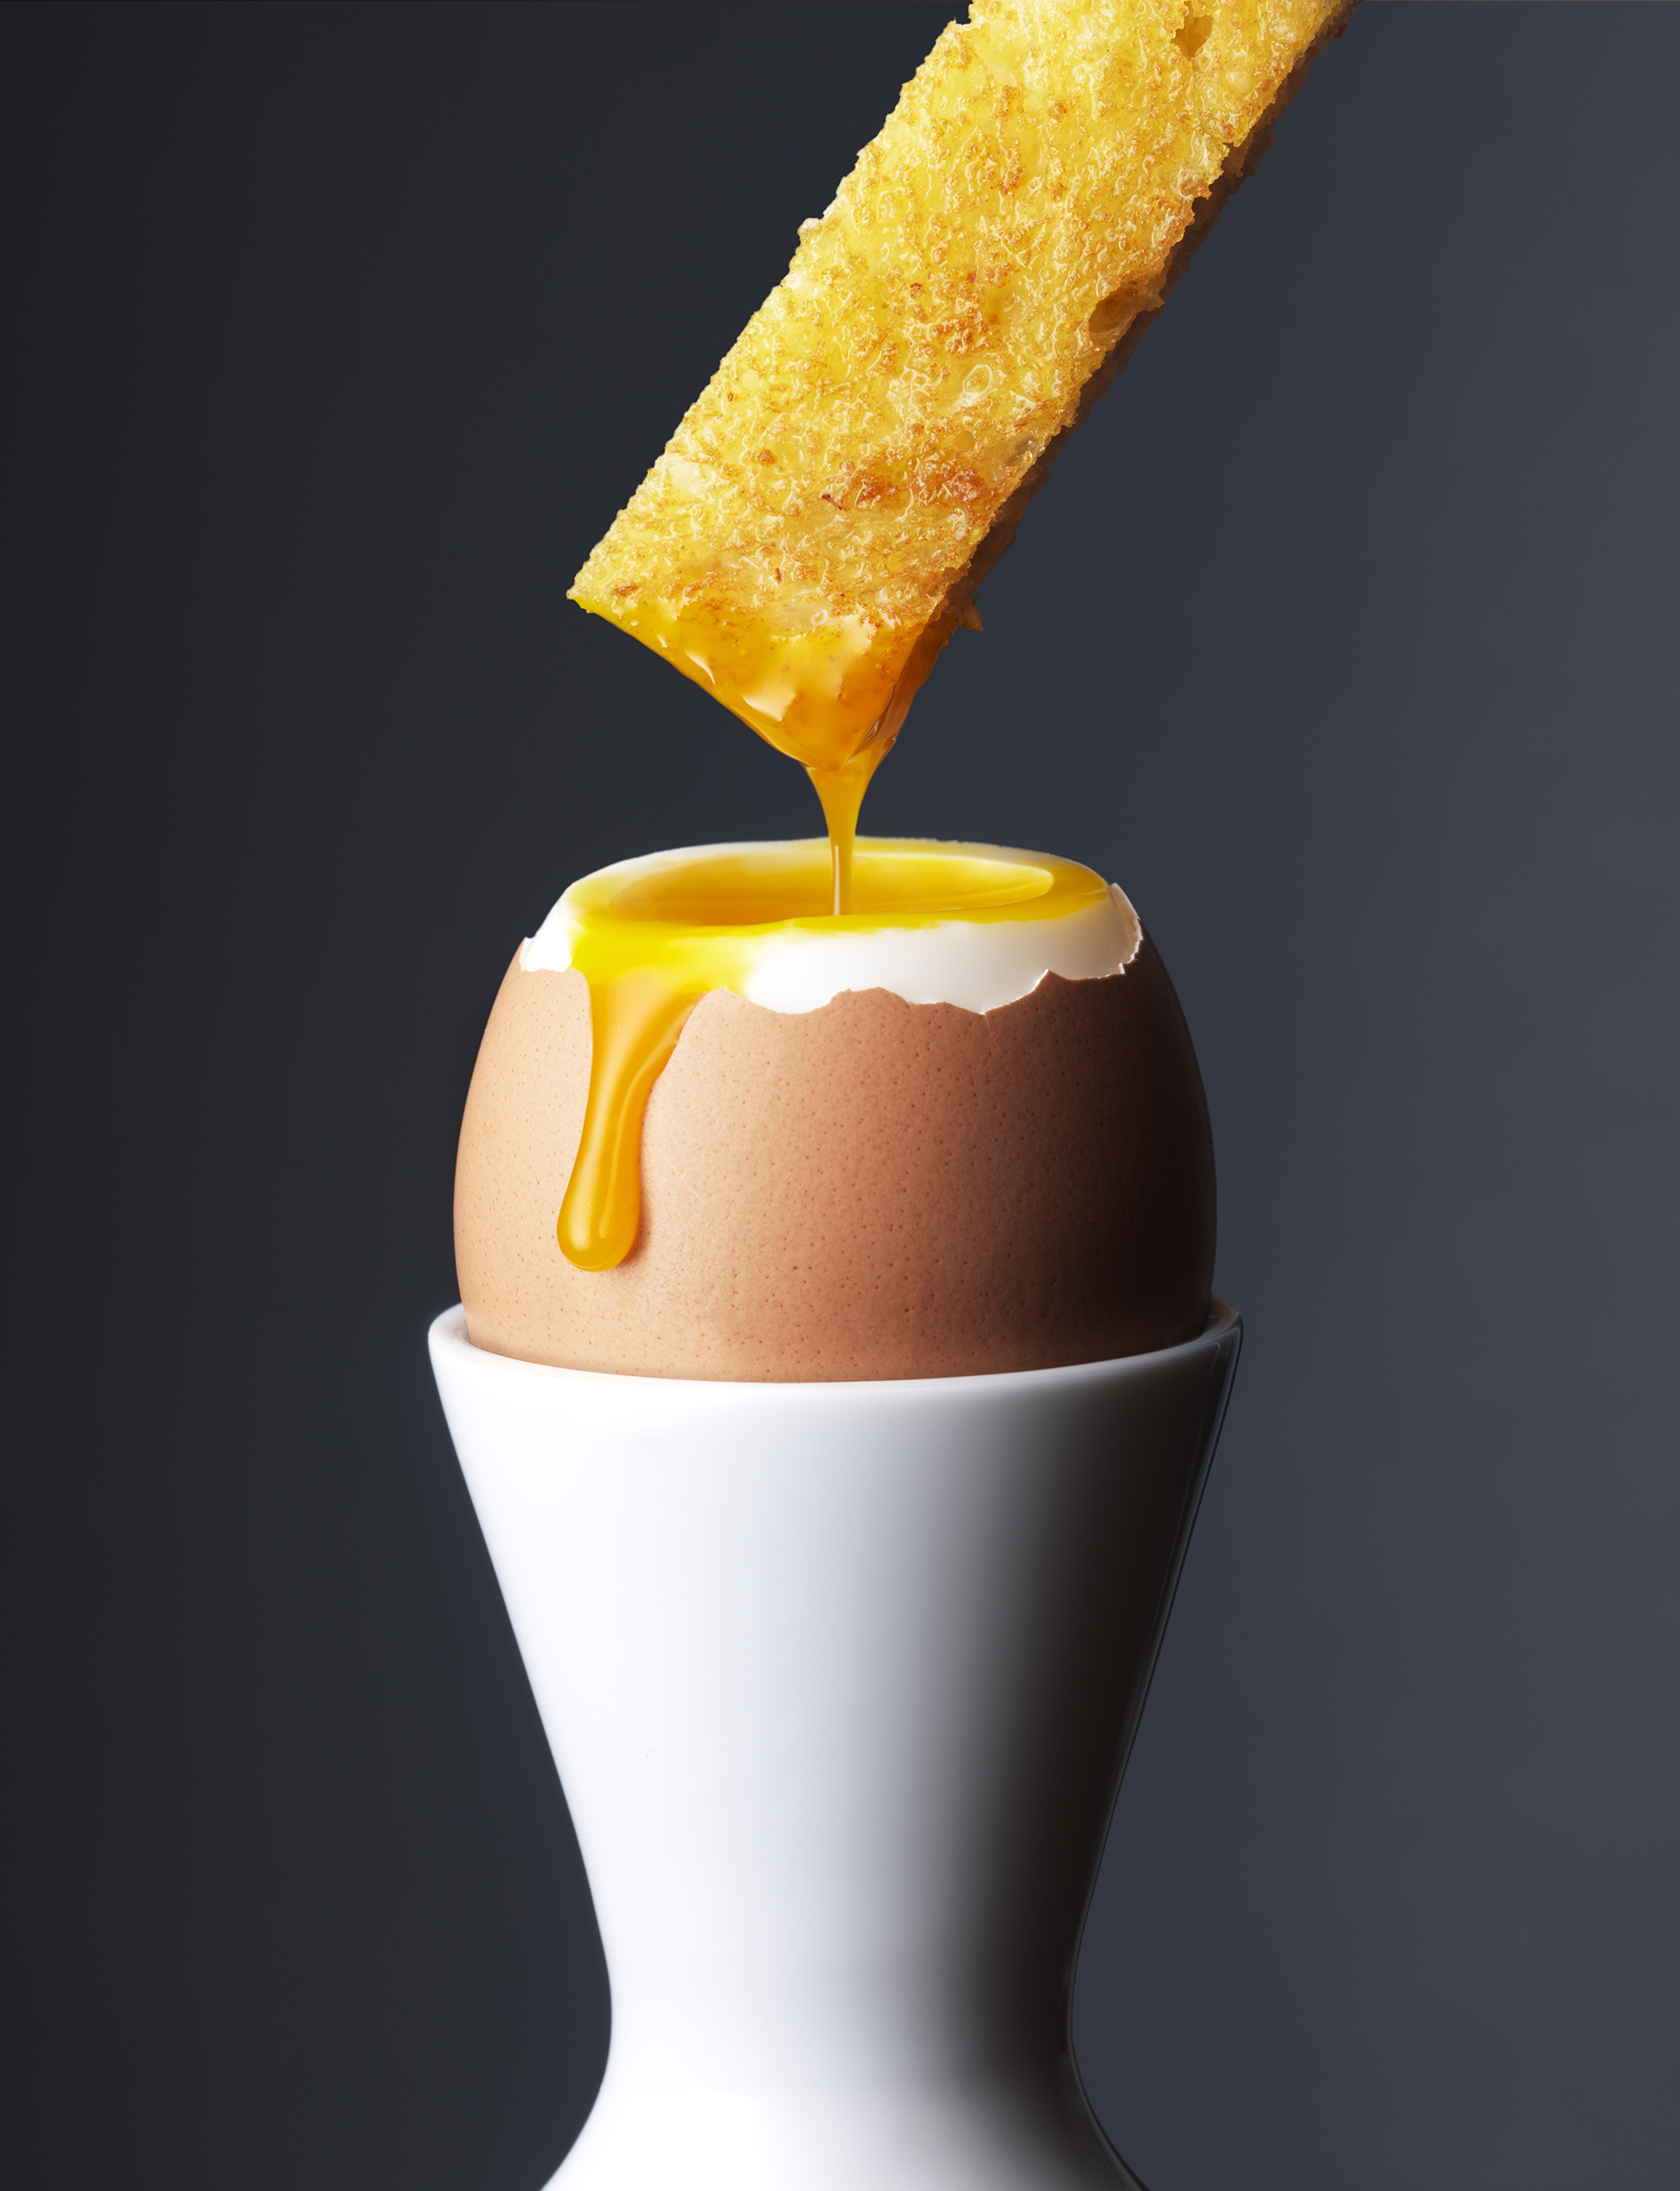 Chelsea Bloxsome | Food Photographer London boiled egg B 1